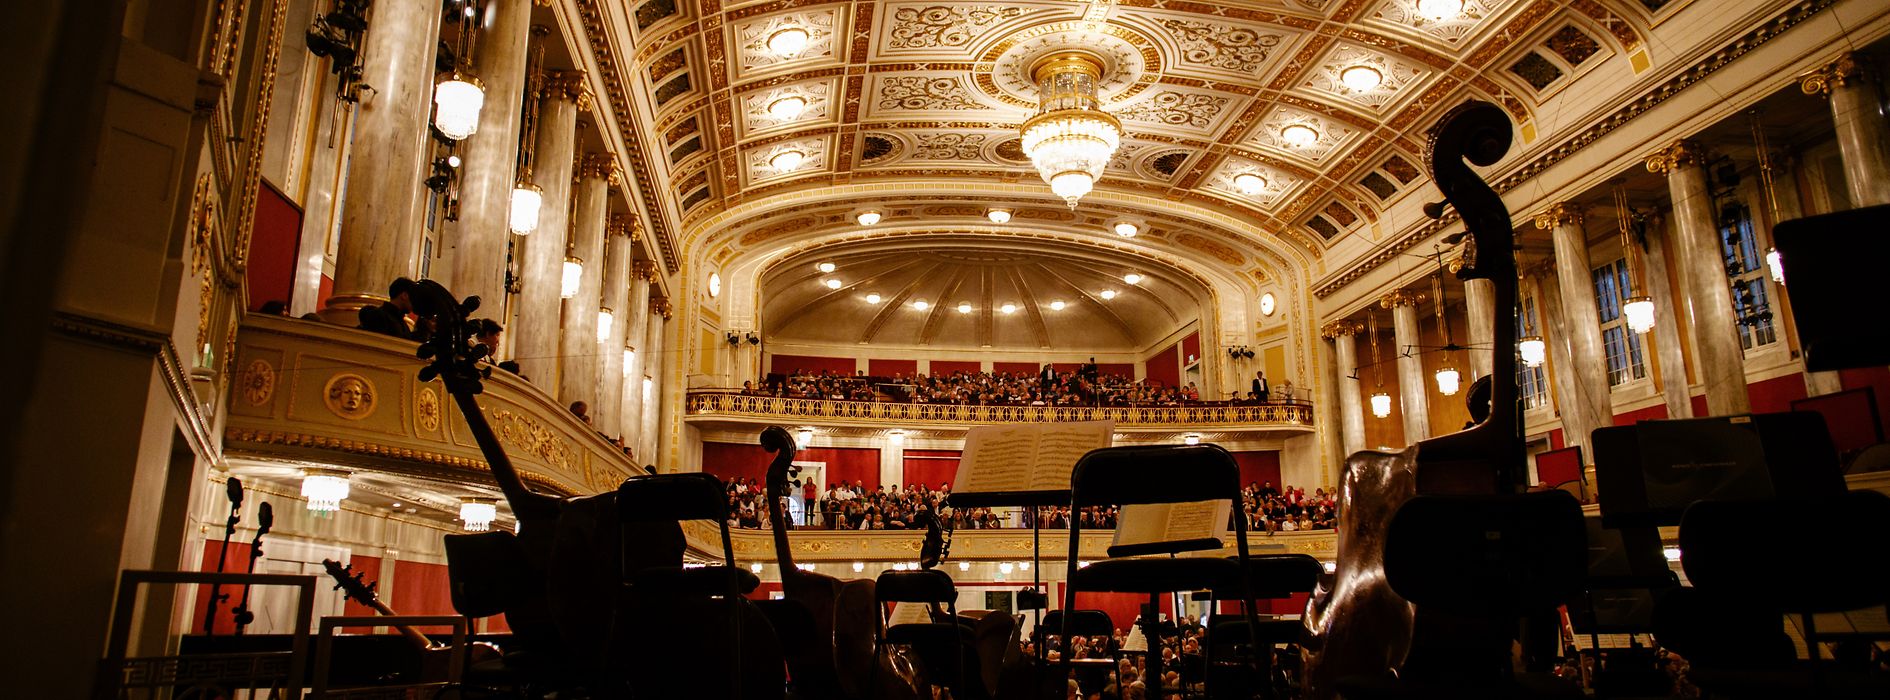 Koncert orkiestry Wiener Symphoniker w Wiedeńskiej Sali Koncertowej Konzerthaus